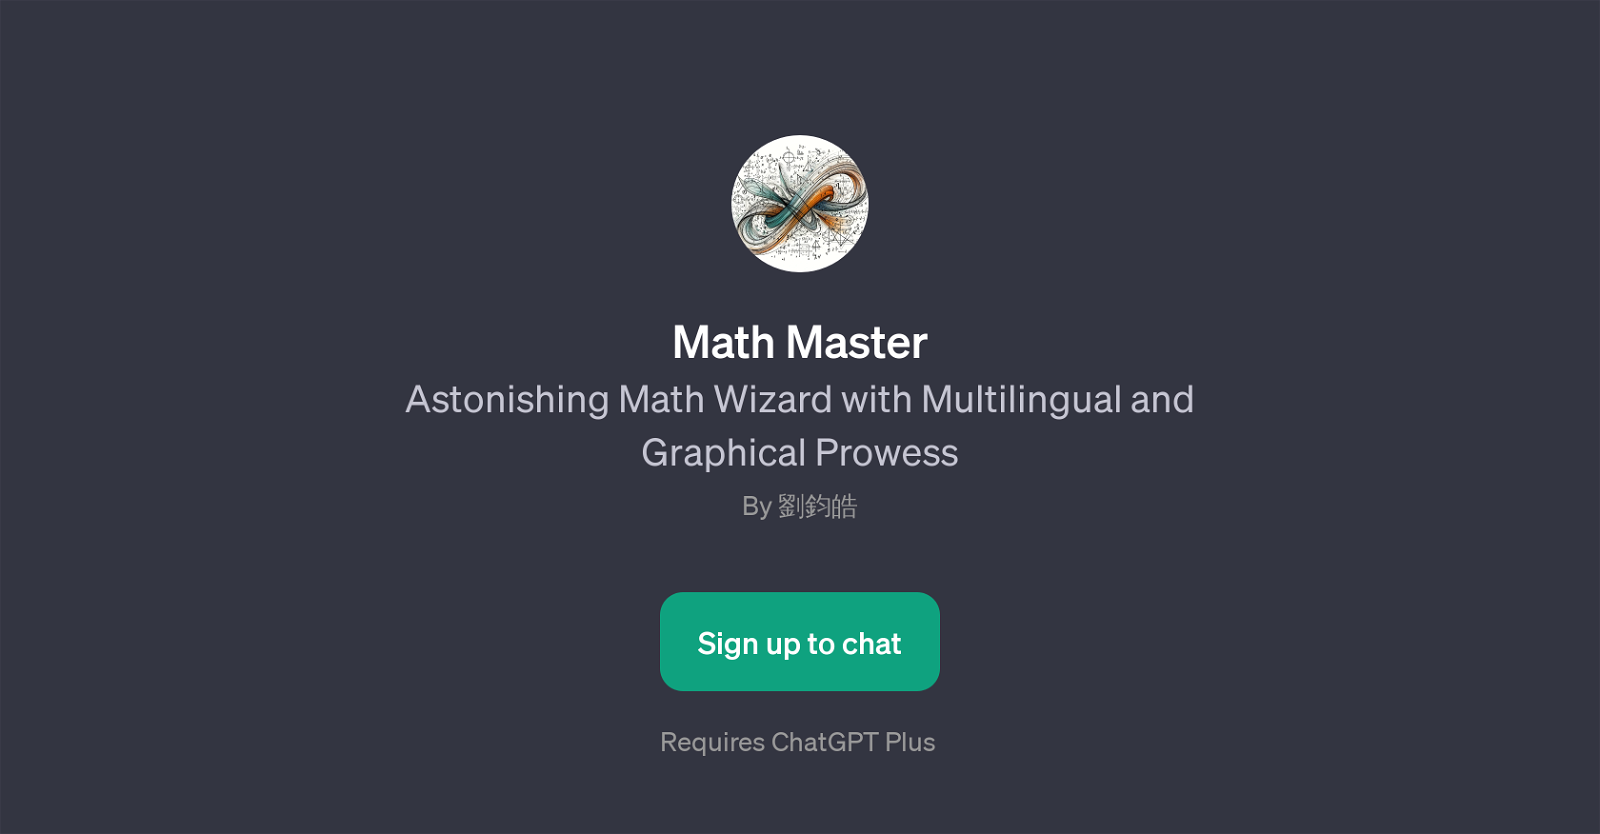 Math Master website